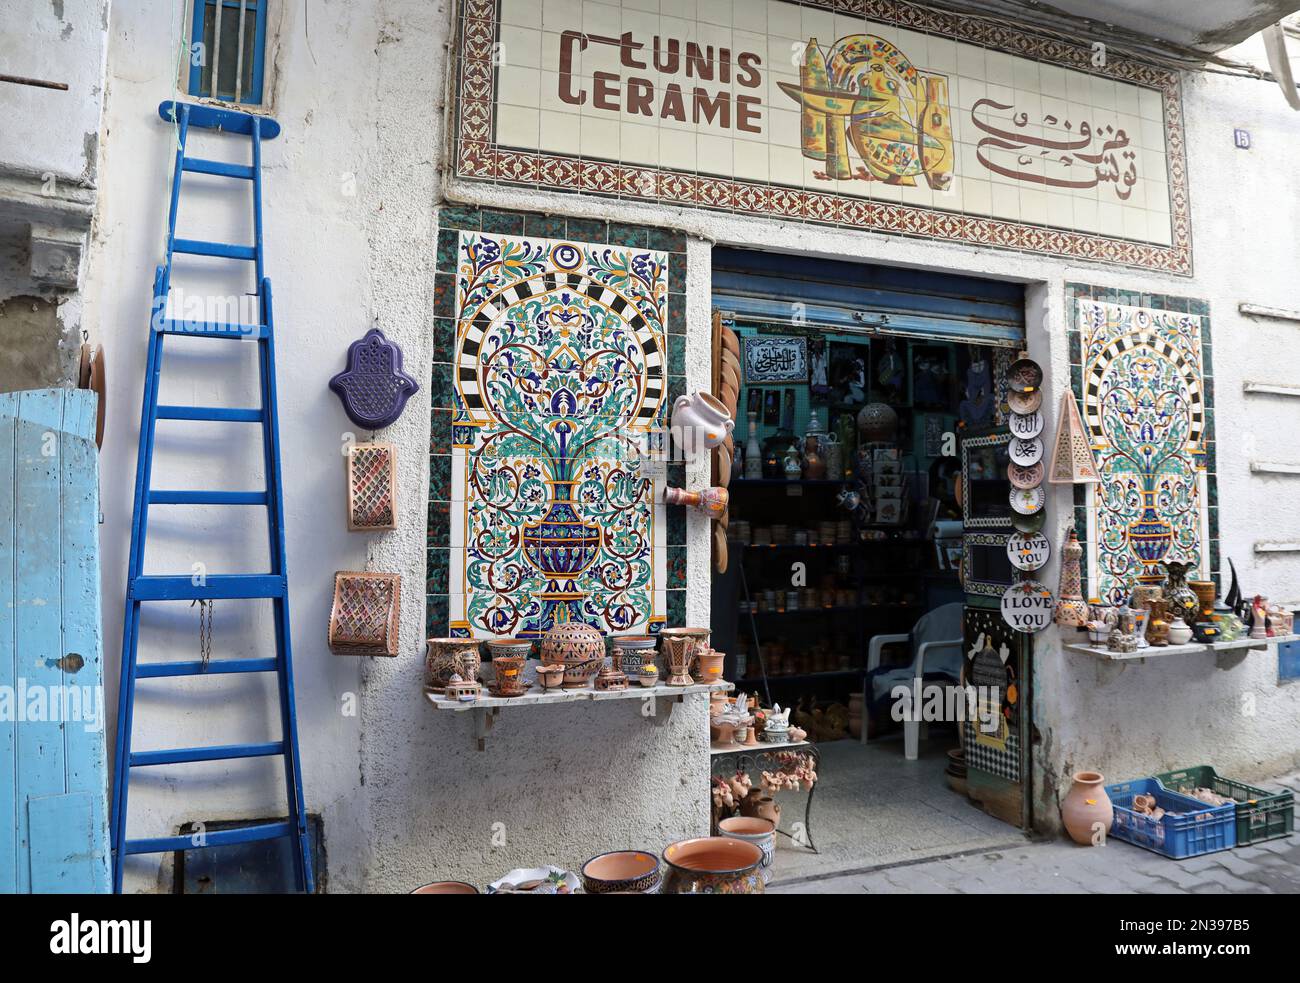 Tunis Cerame store in the medina Stock Photo